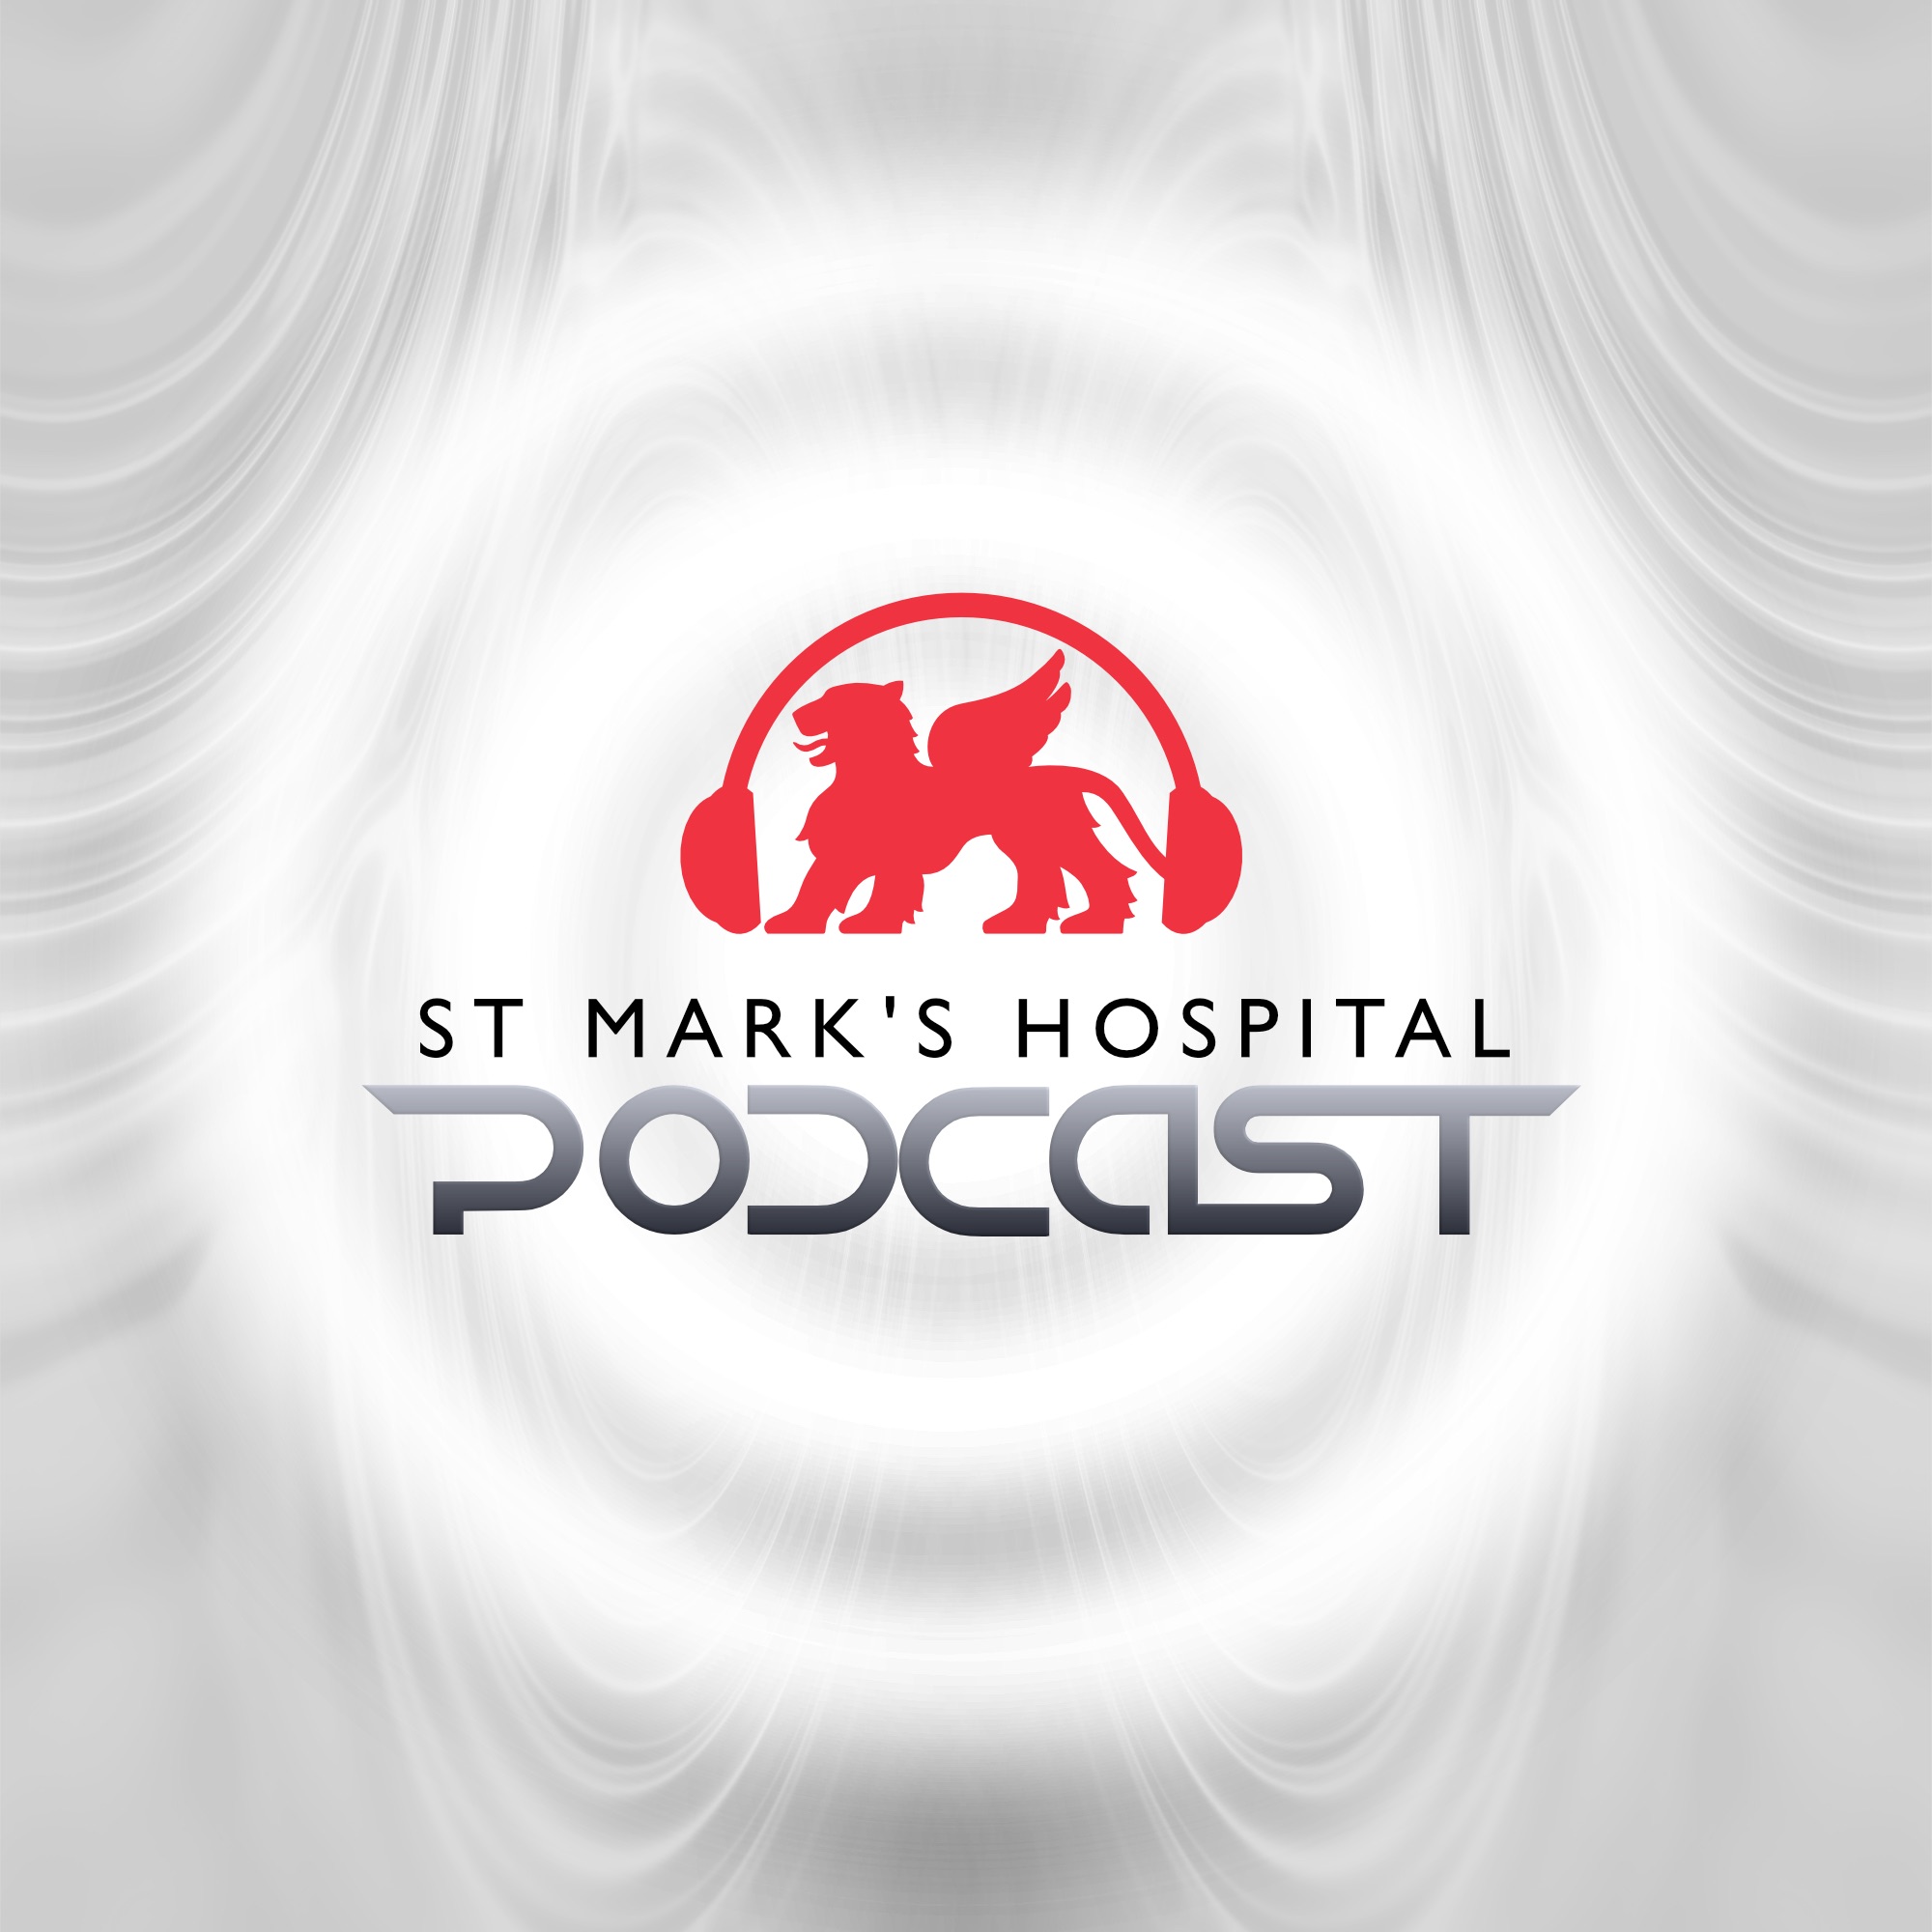 St Marks Hospital Podcast